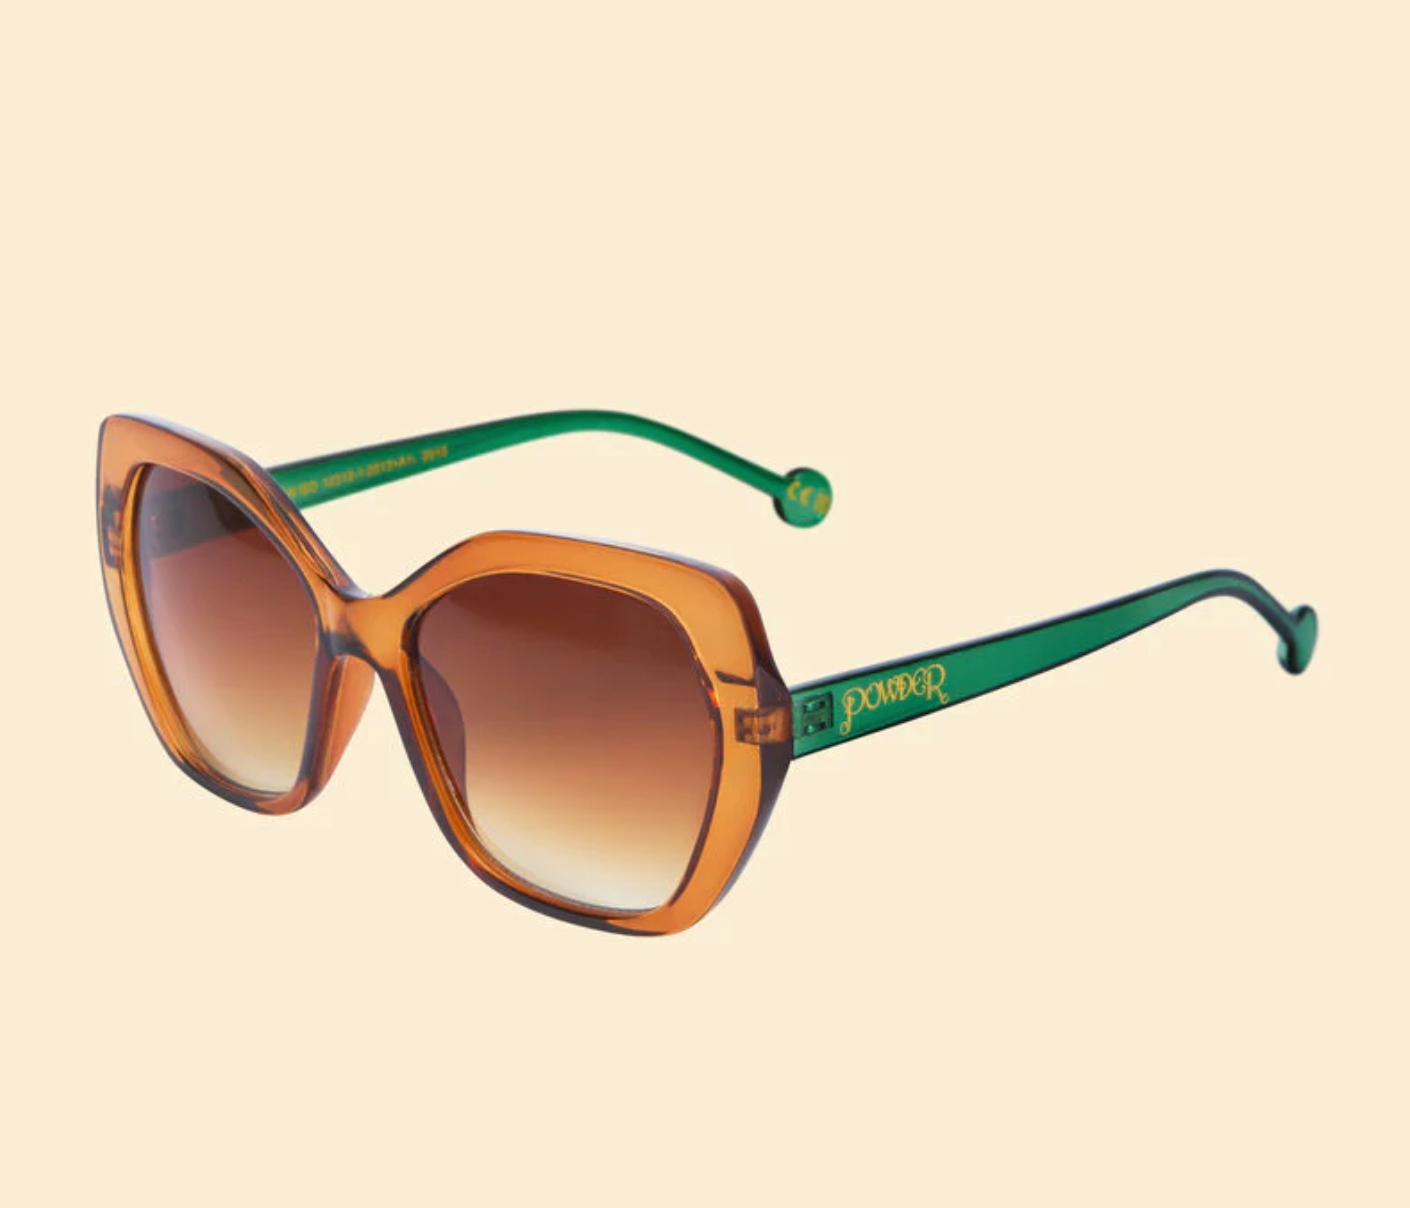 Briana Limited Edition Sunglasses - Mandarin/Sage